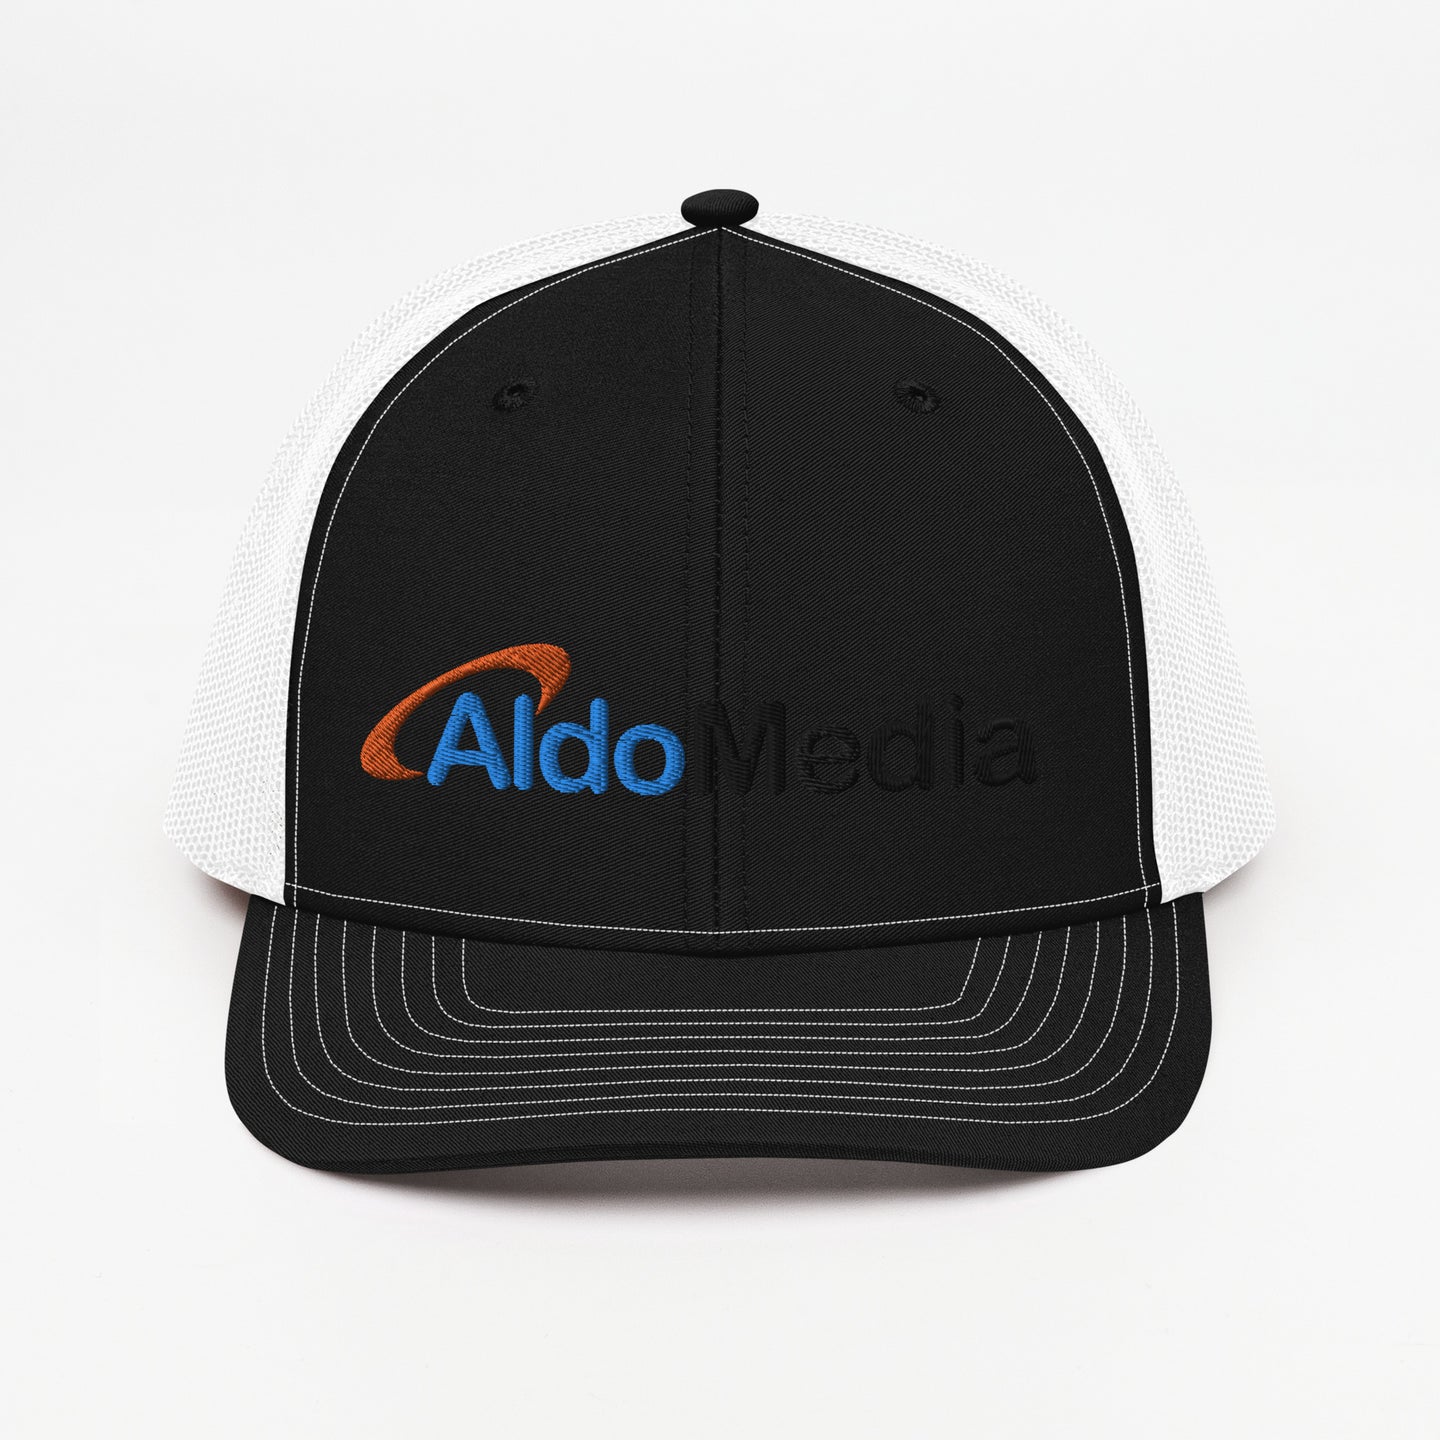 AldoMedia, LLC Trucker Cap